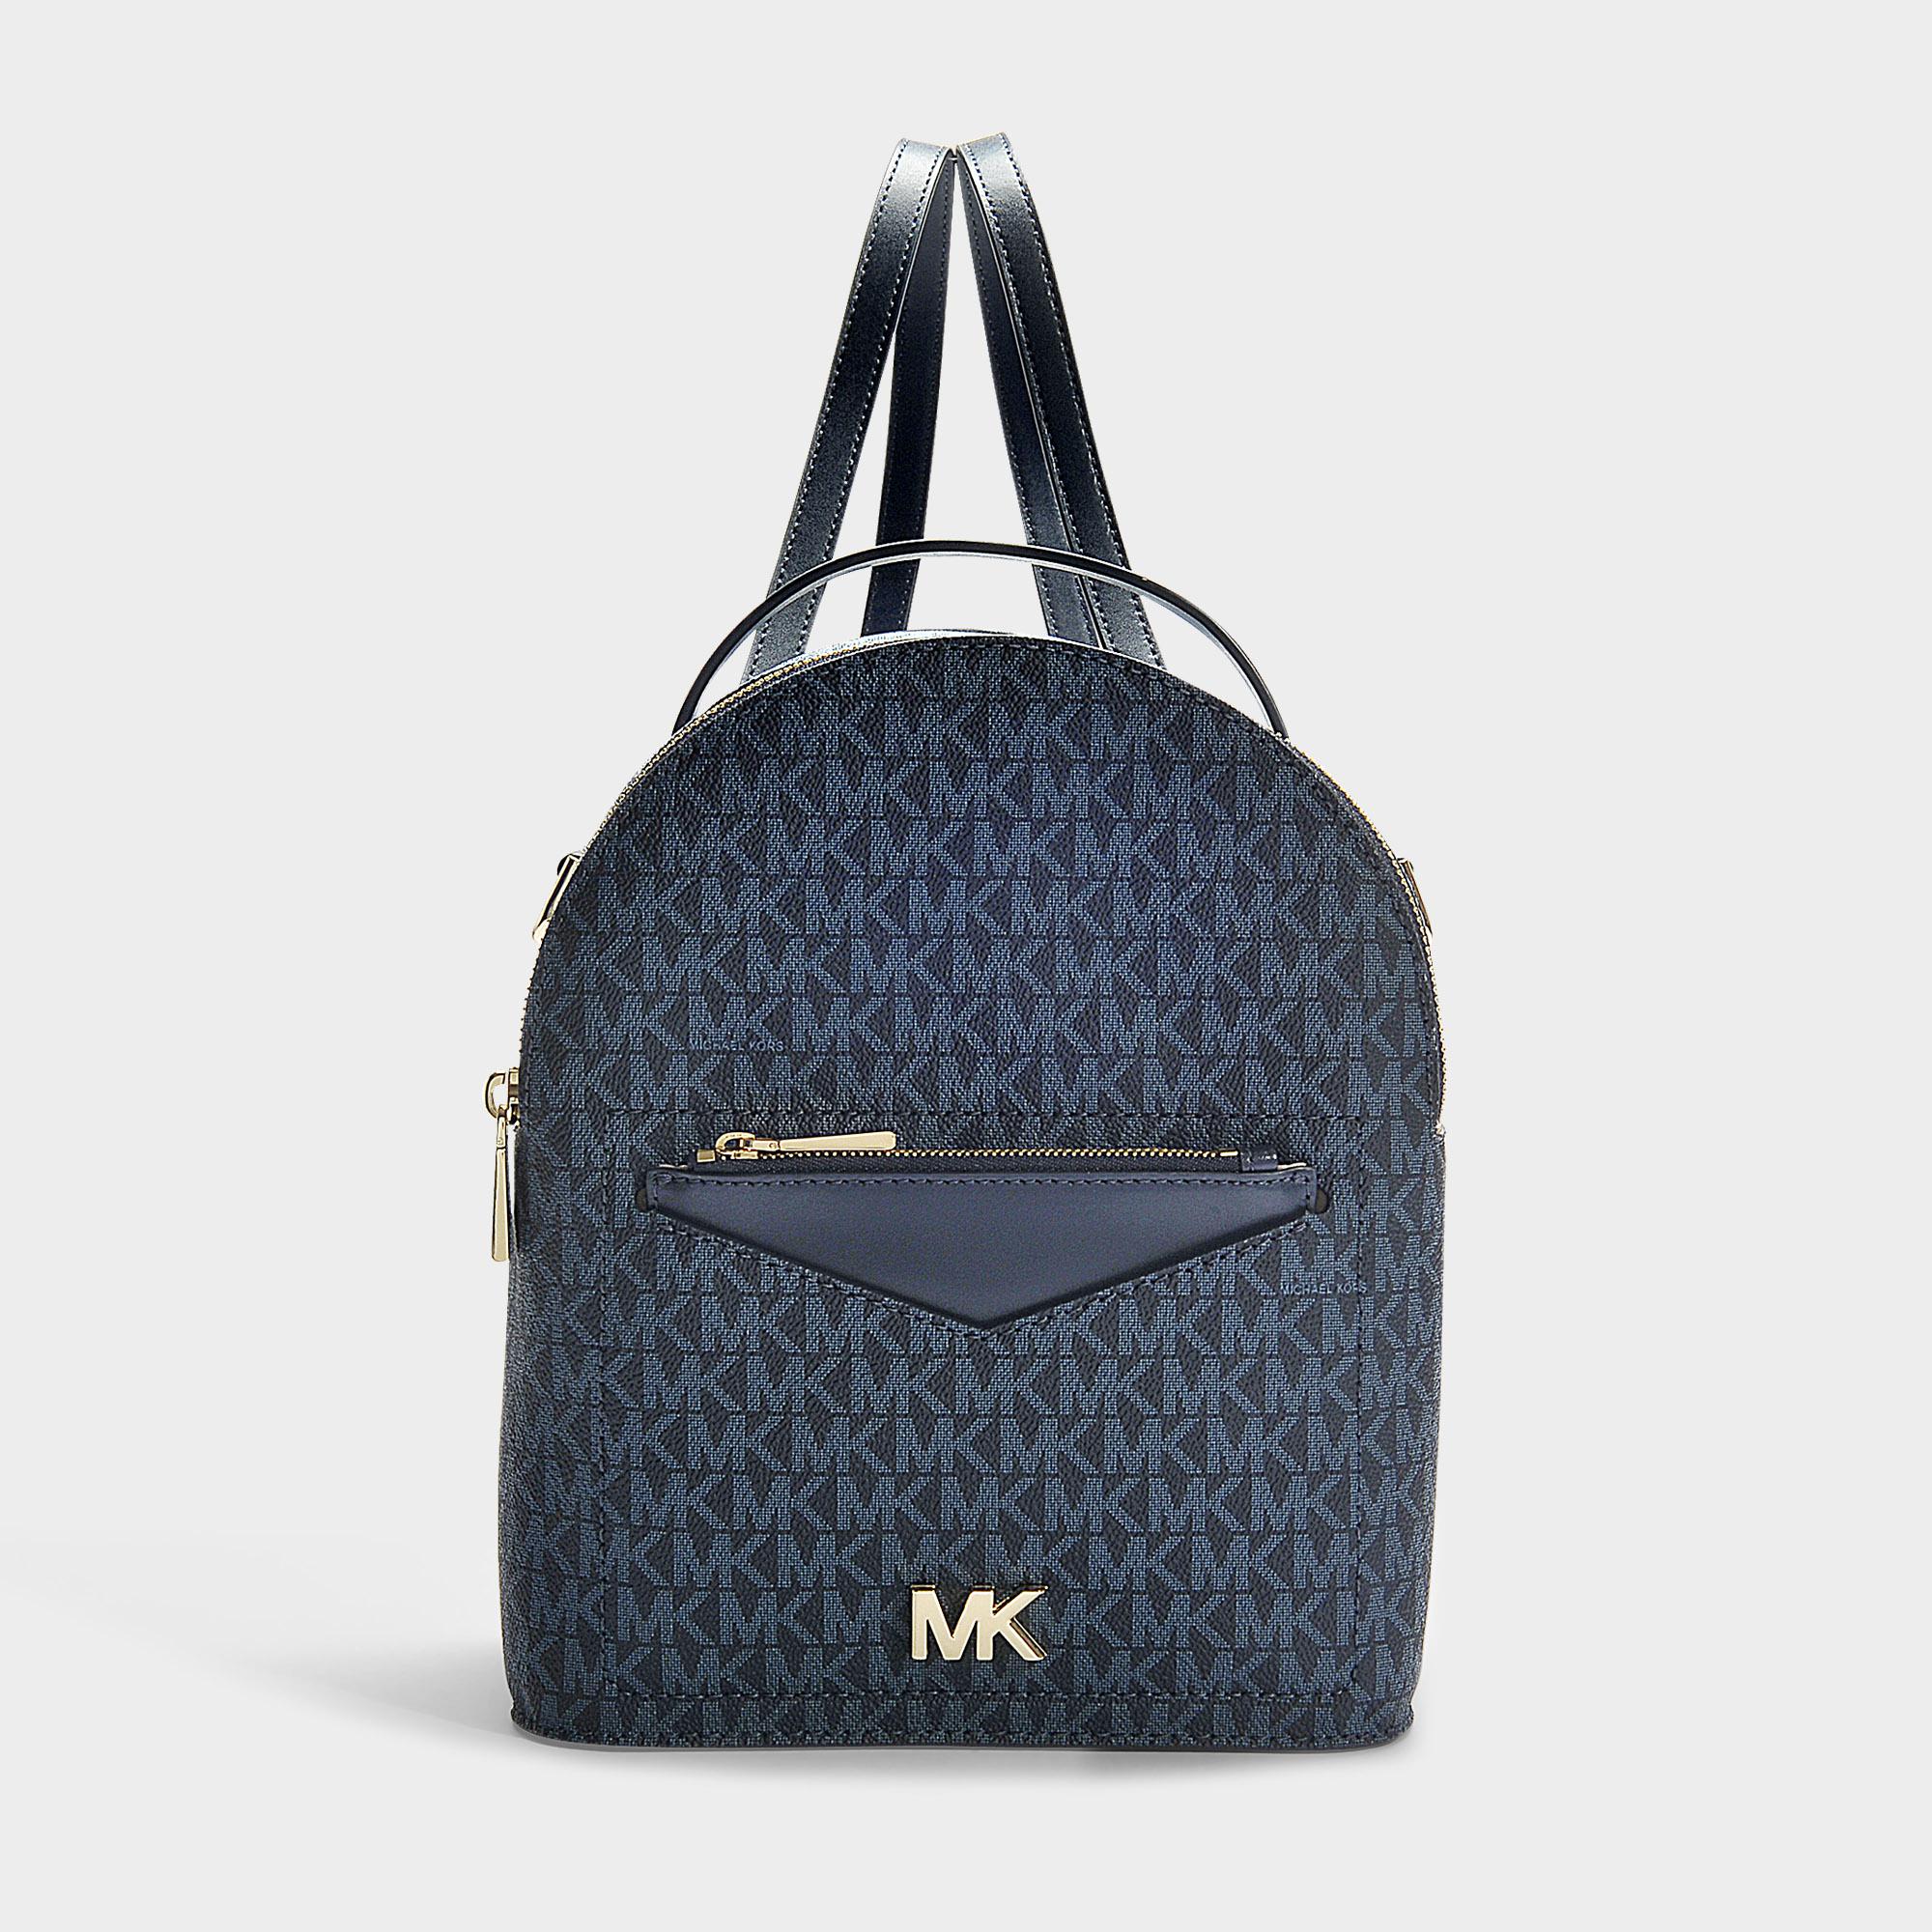 michael kors mini backpack blue